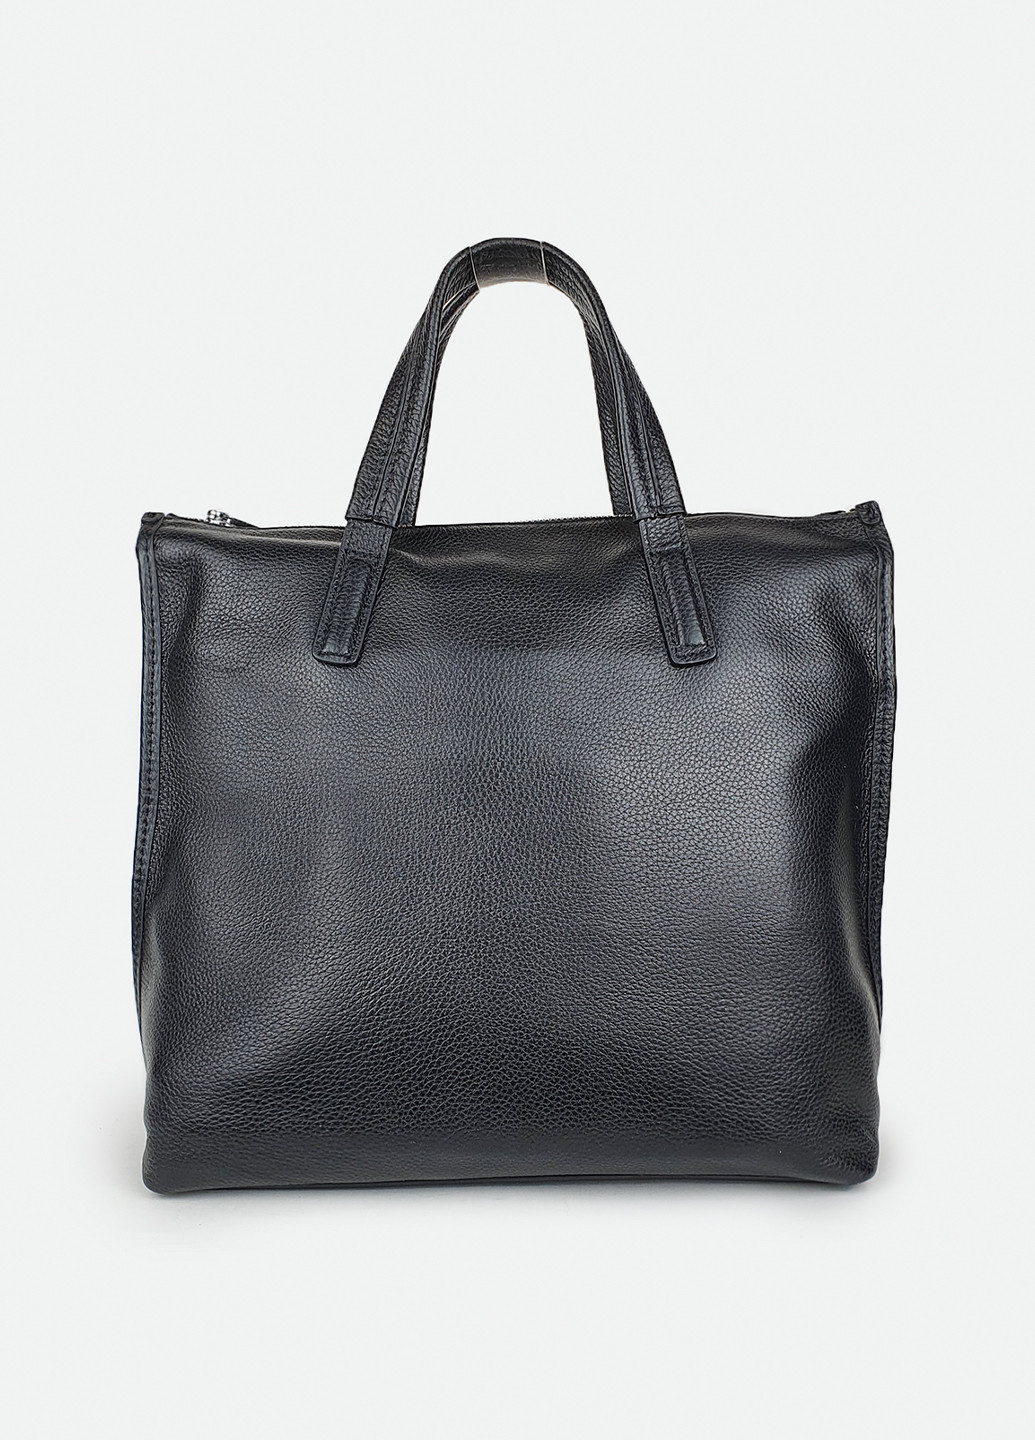 Жіноча чорна велика сумка натуральна шкіра Fashion (232986058)